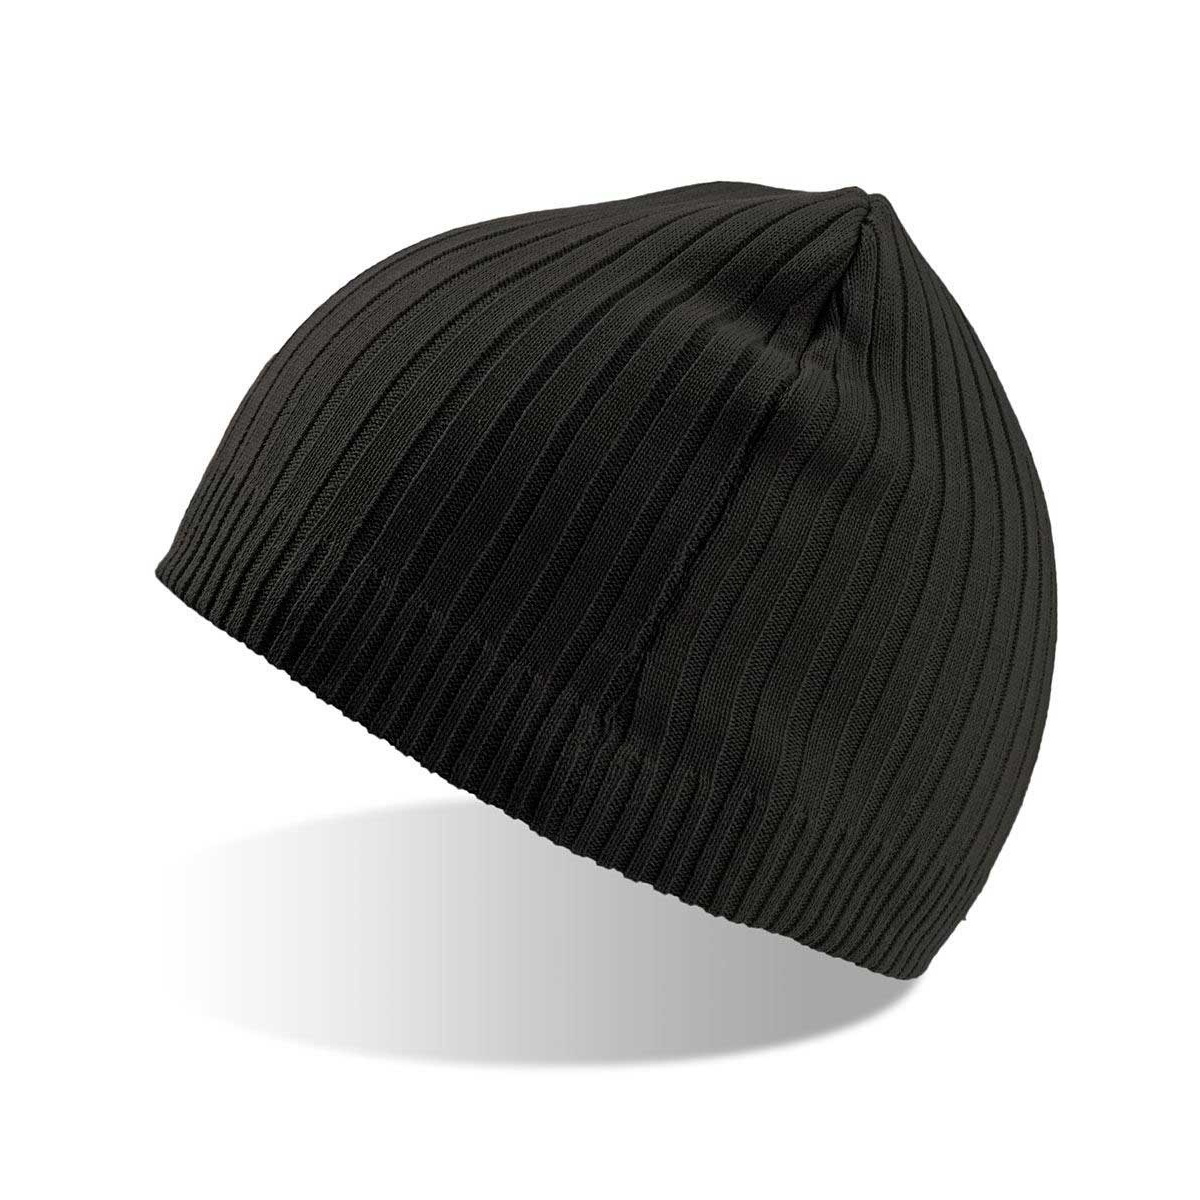 Bonnet de nuit noir made in france Reference : 2056